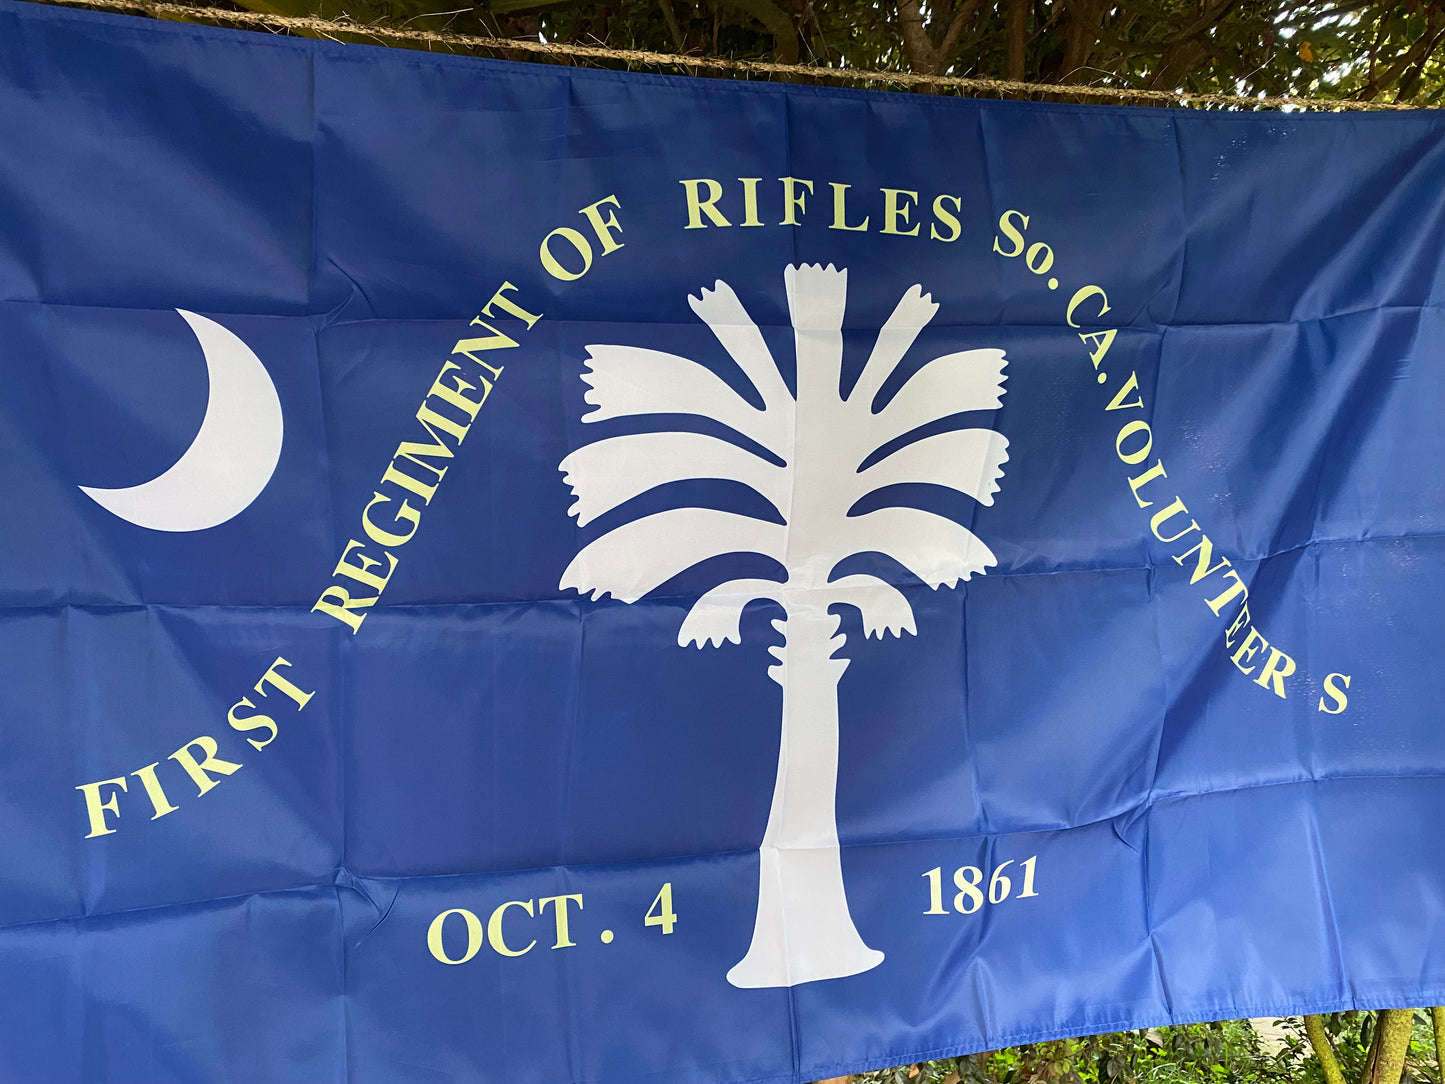 1st Orr's  Regiment of Rifles South Carolina Volunteers House Flag